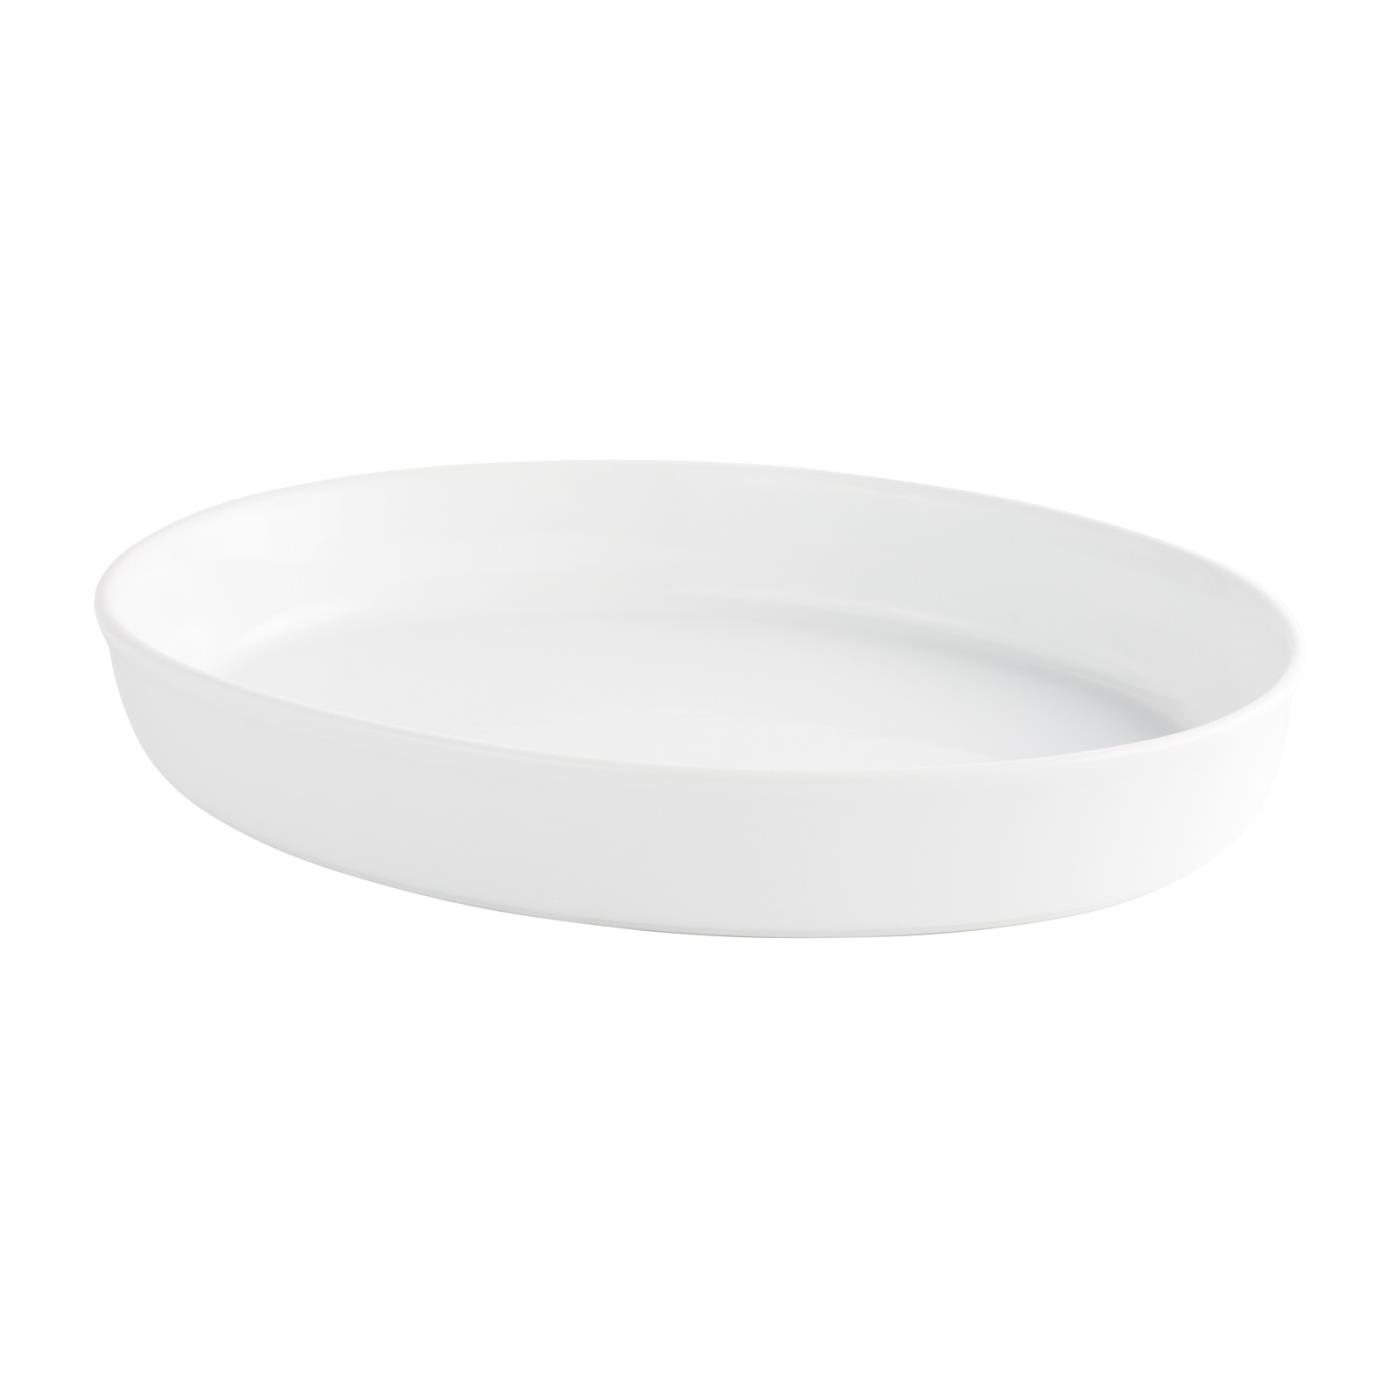 White Ceramic Oval Casserole Dish - 10" x 14.75"